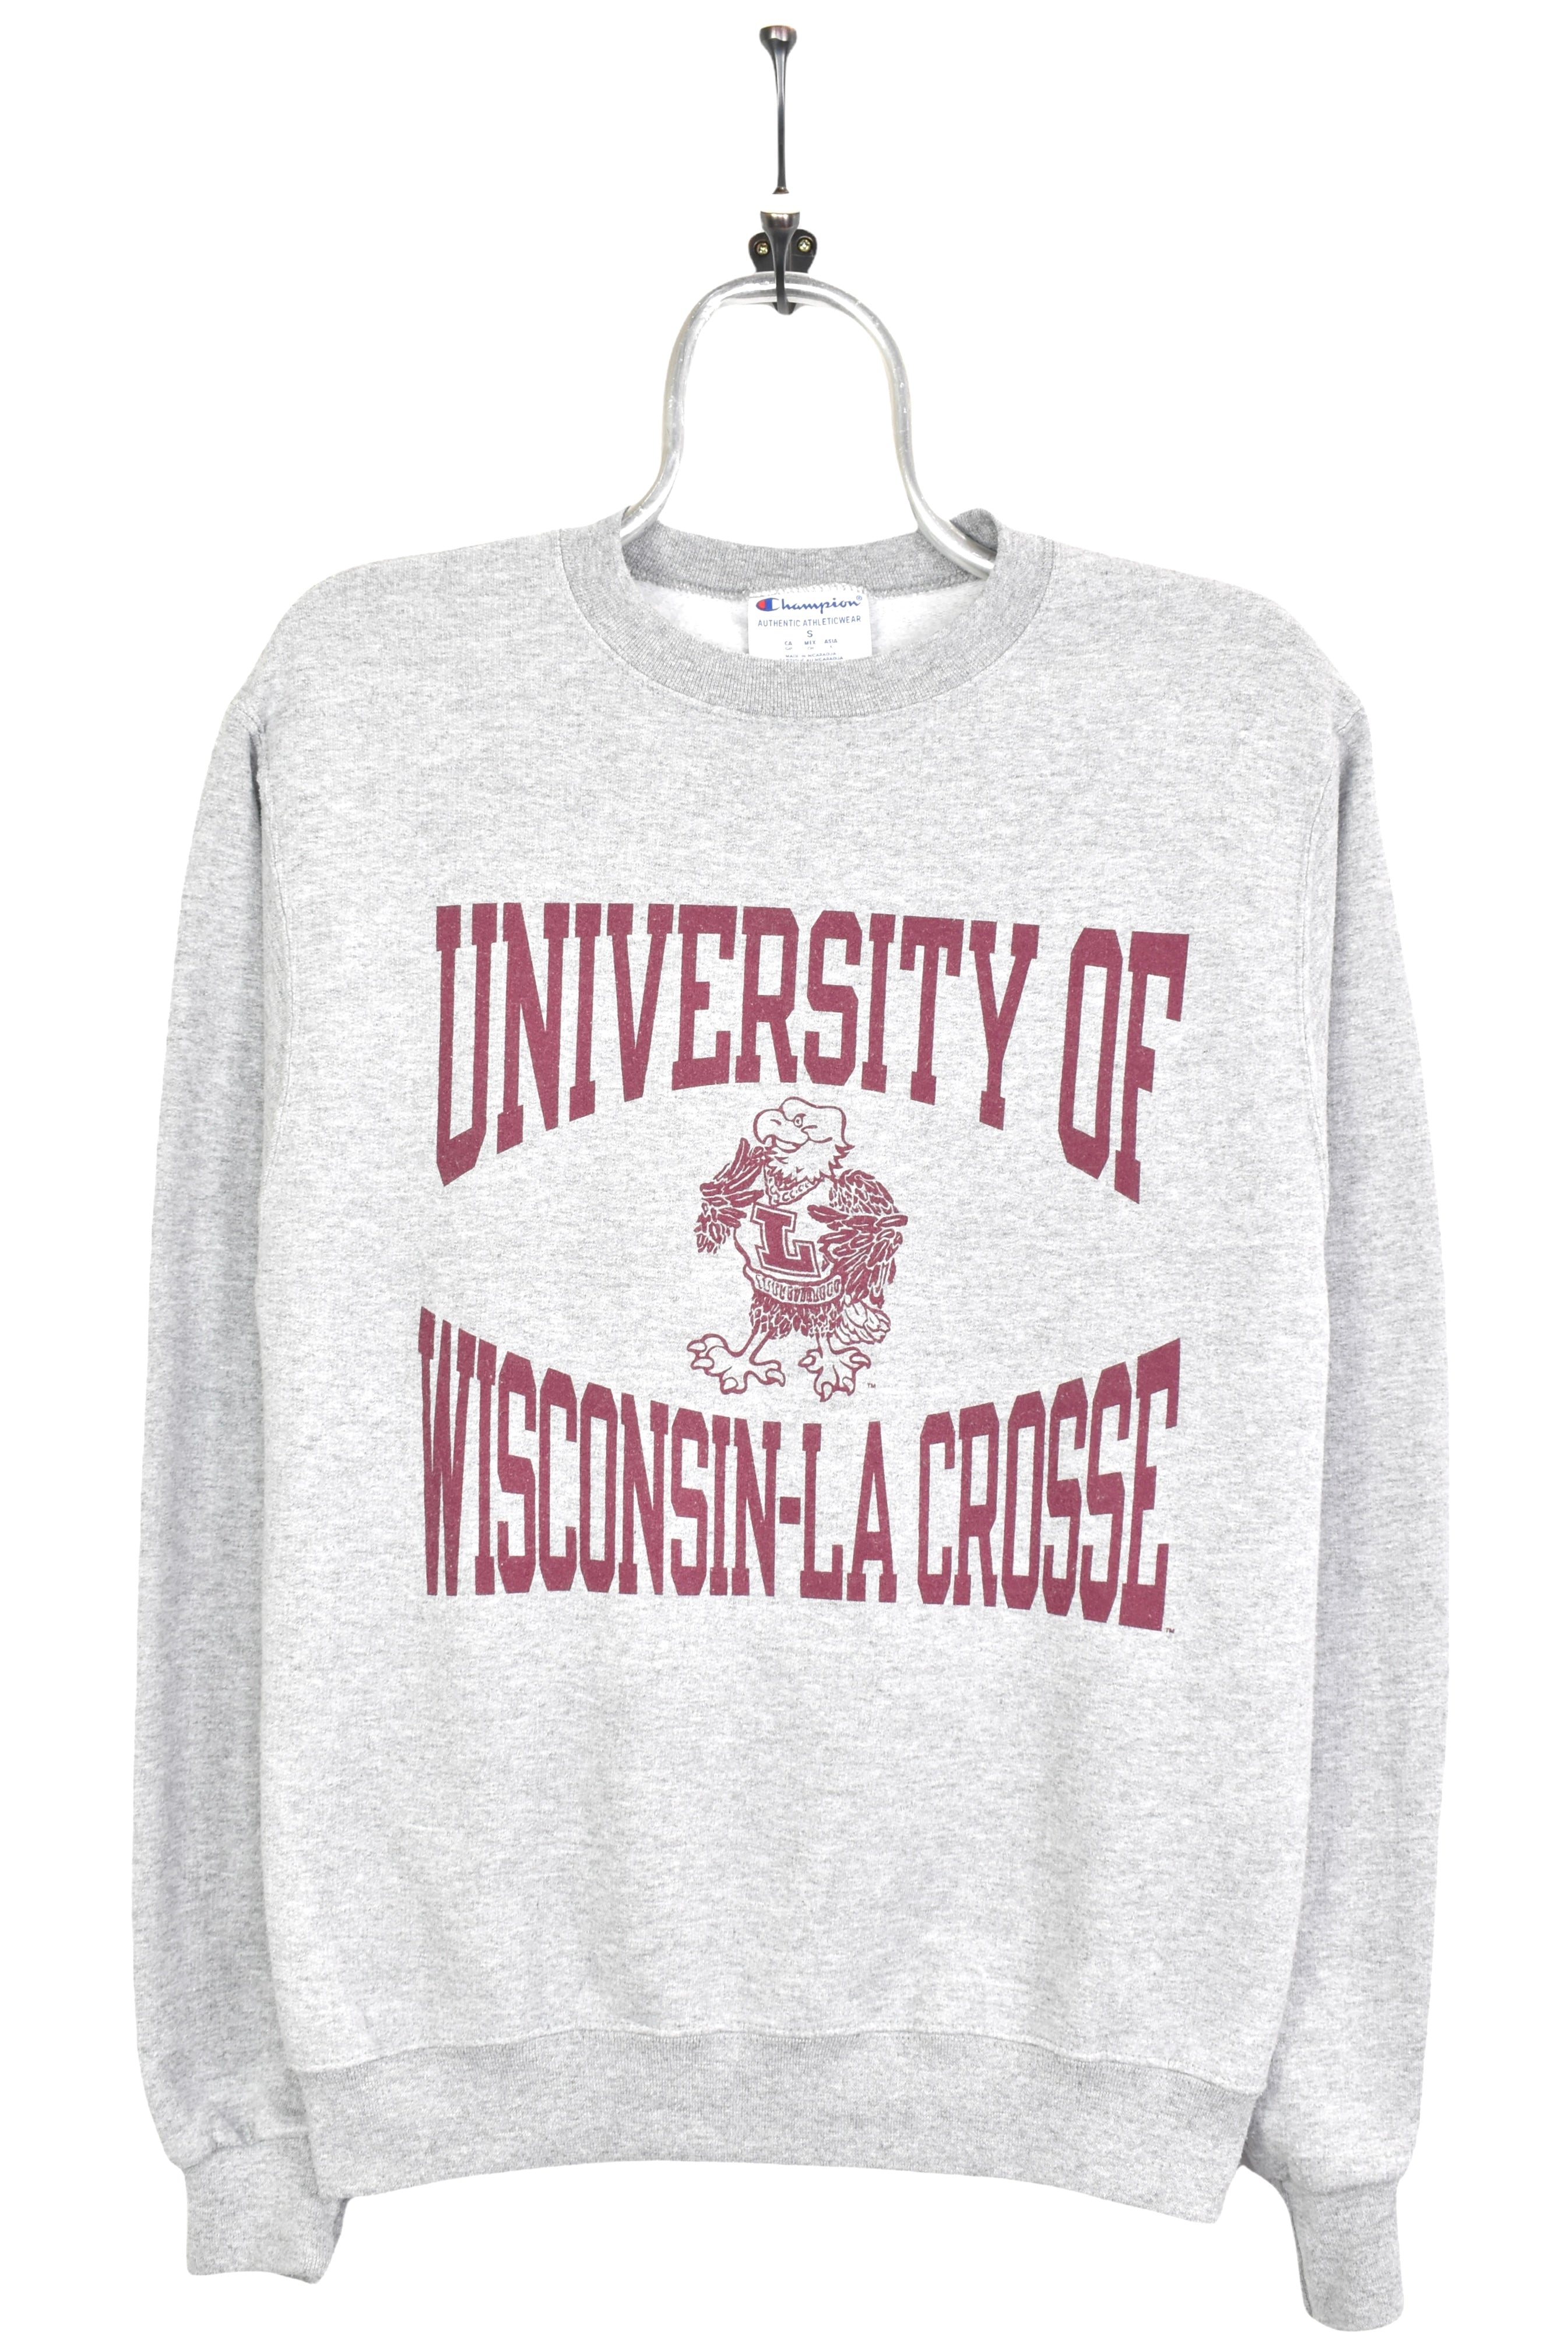 Vintage University of Wisconsin sweatshirt, long sleeve graphic crewneck - small, grey COLLEGE